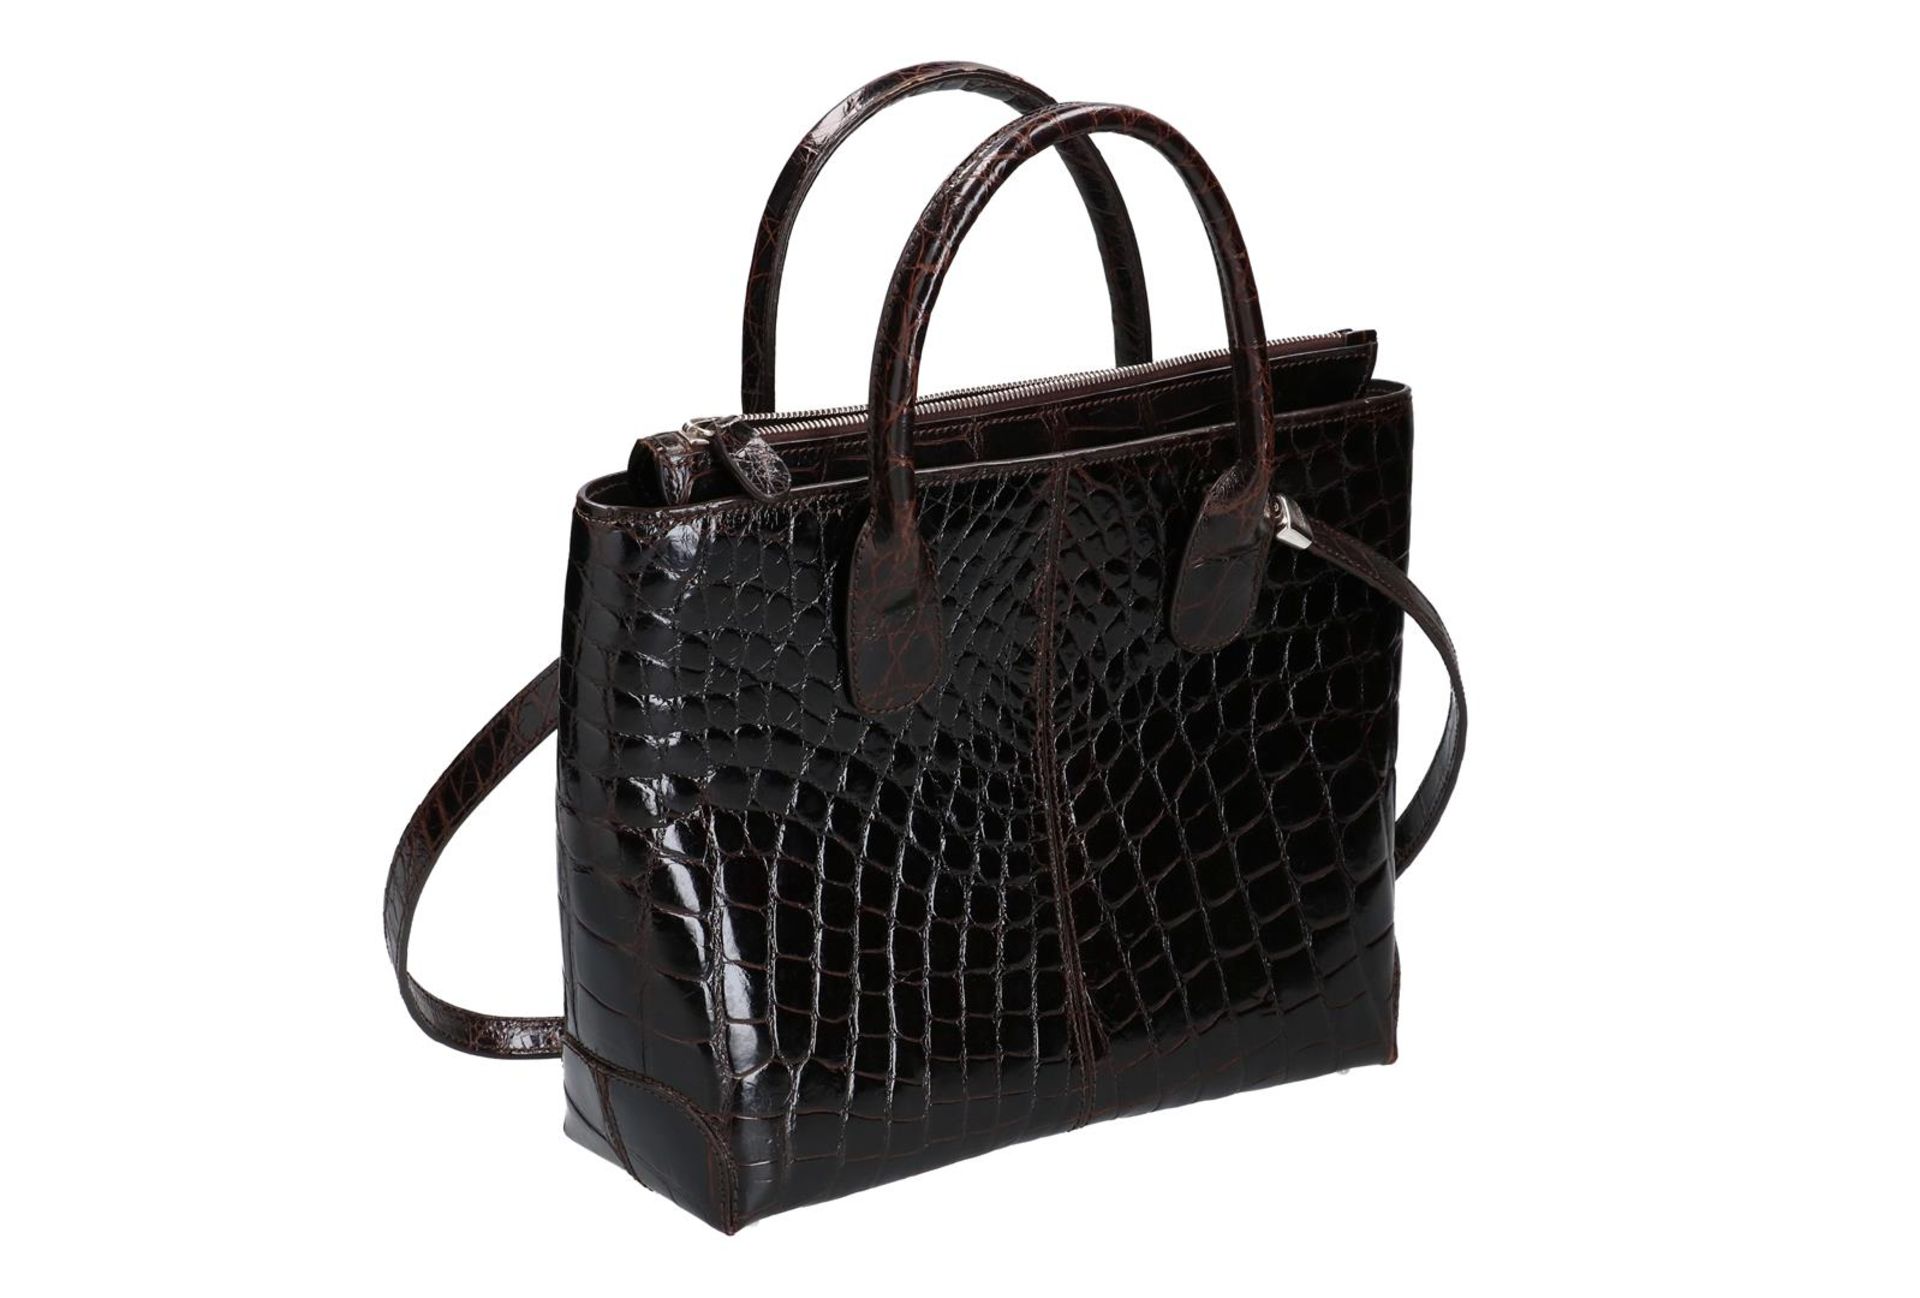 Tods, brown crocodile pattern leather handbag with shoulder strap. H x W x D: 25 x 33 x 10 cm.